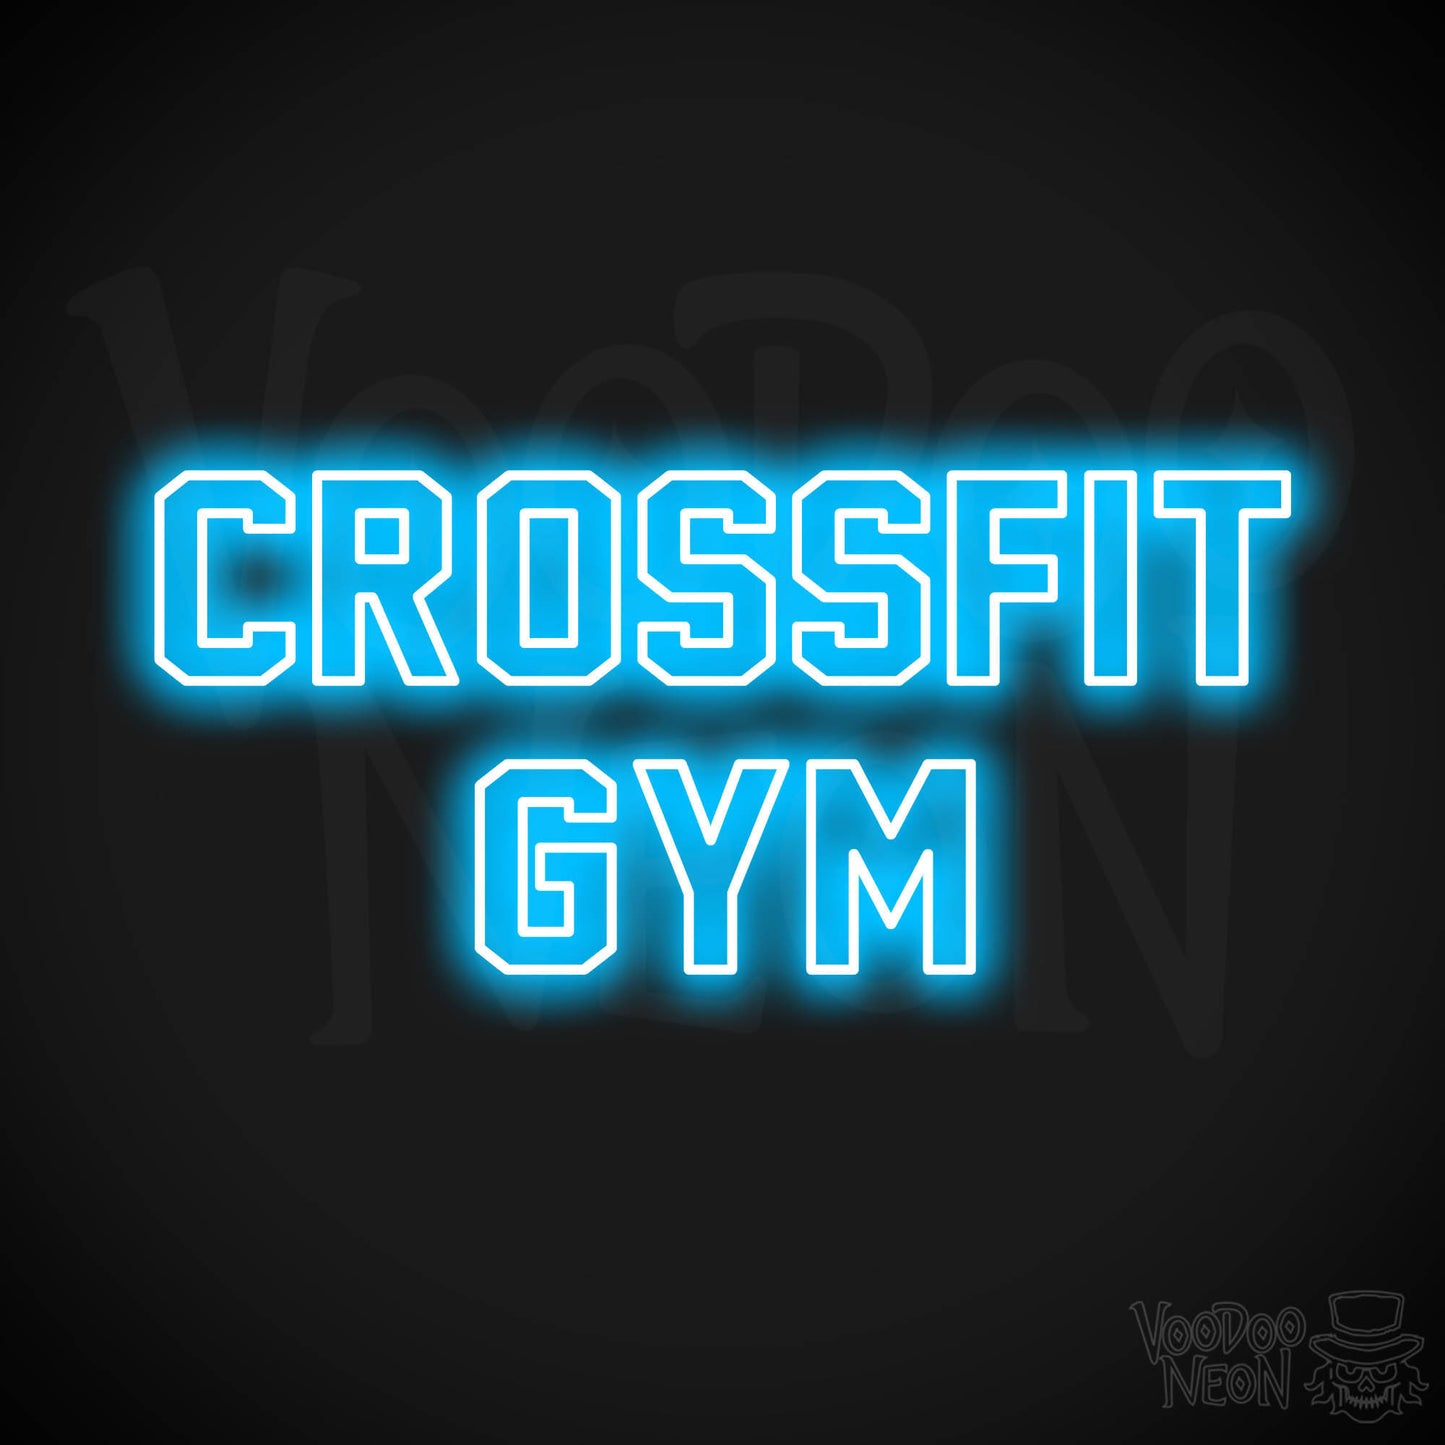 Crossfit Gym LED Neon - Dark Blue